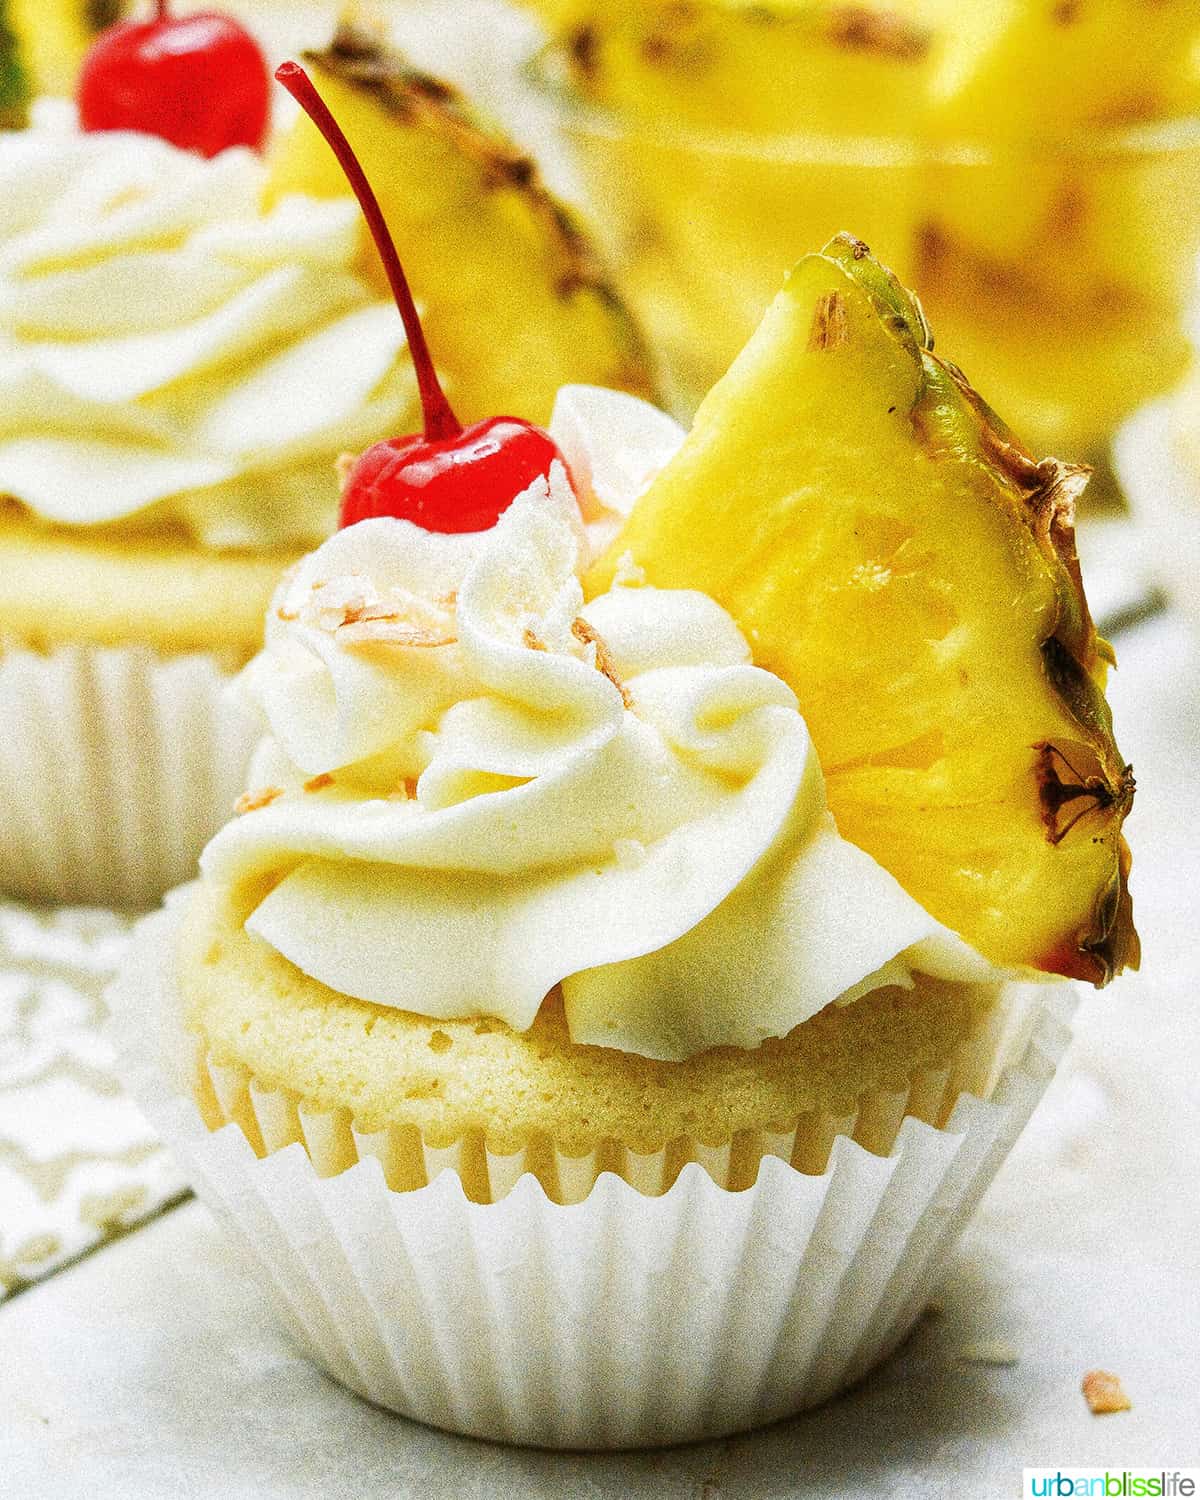 single pina colada cupcake with slice of pineapple.